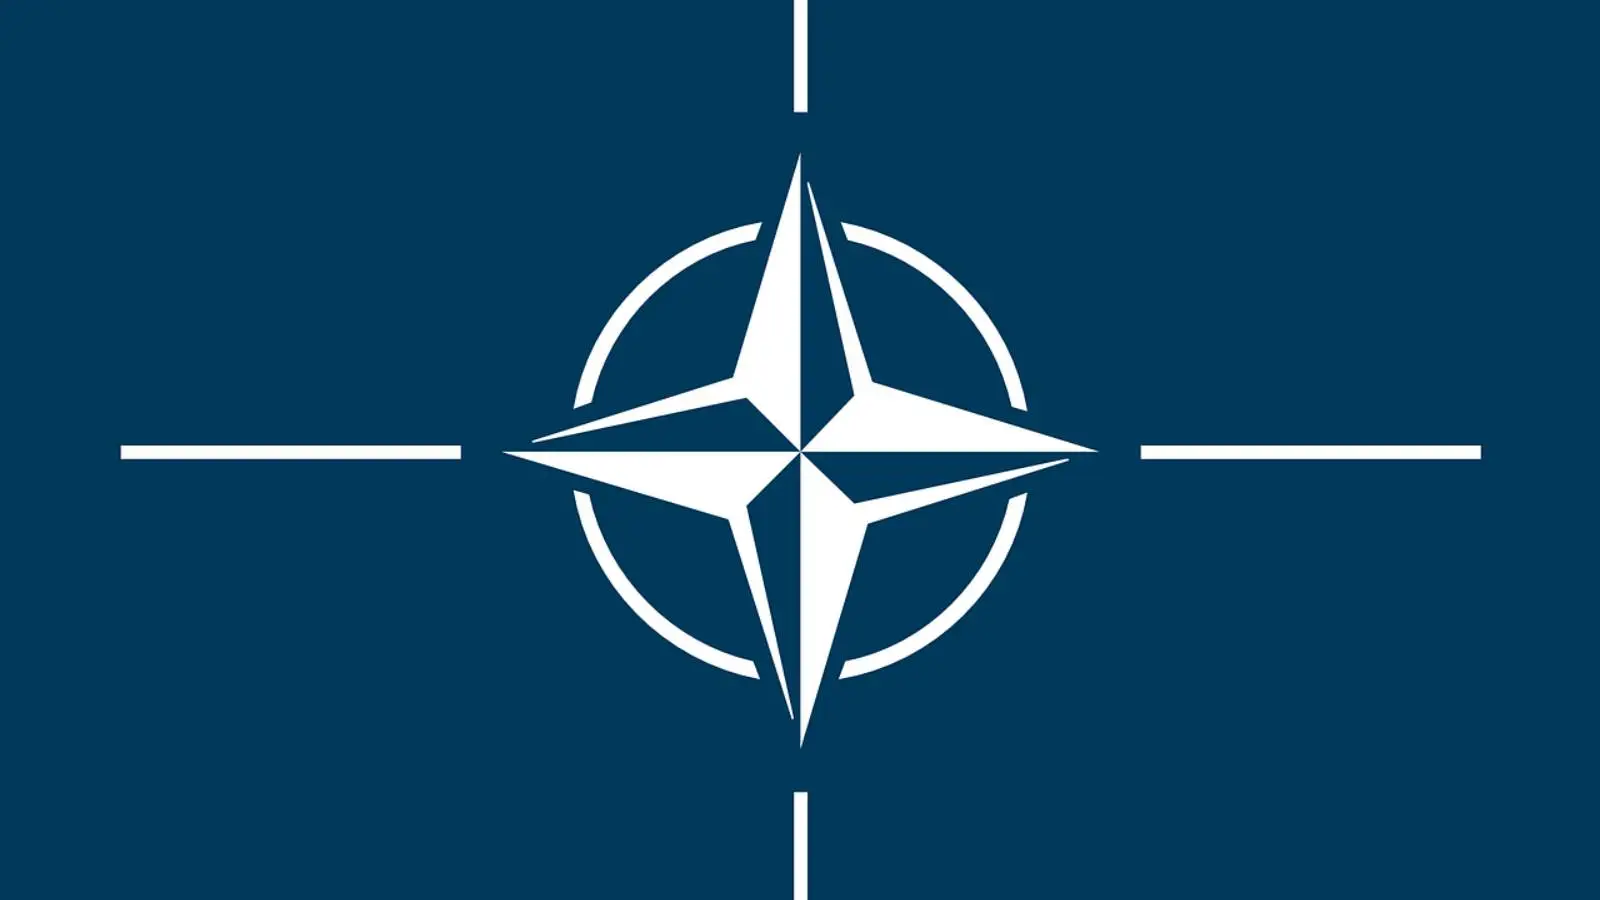 NATO isi va Spori Prezenta in Kosovo daca apar Noi Incidente cu Serbia